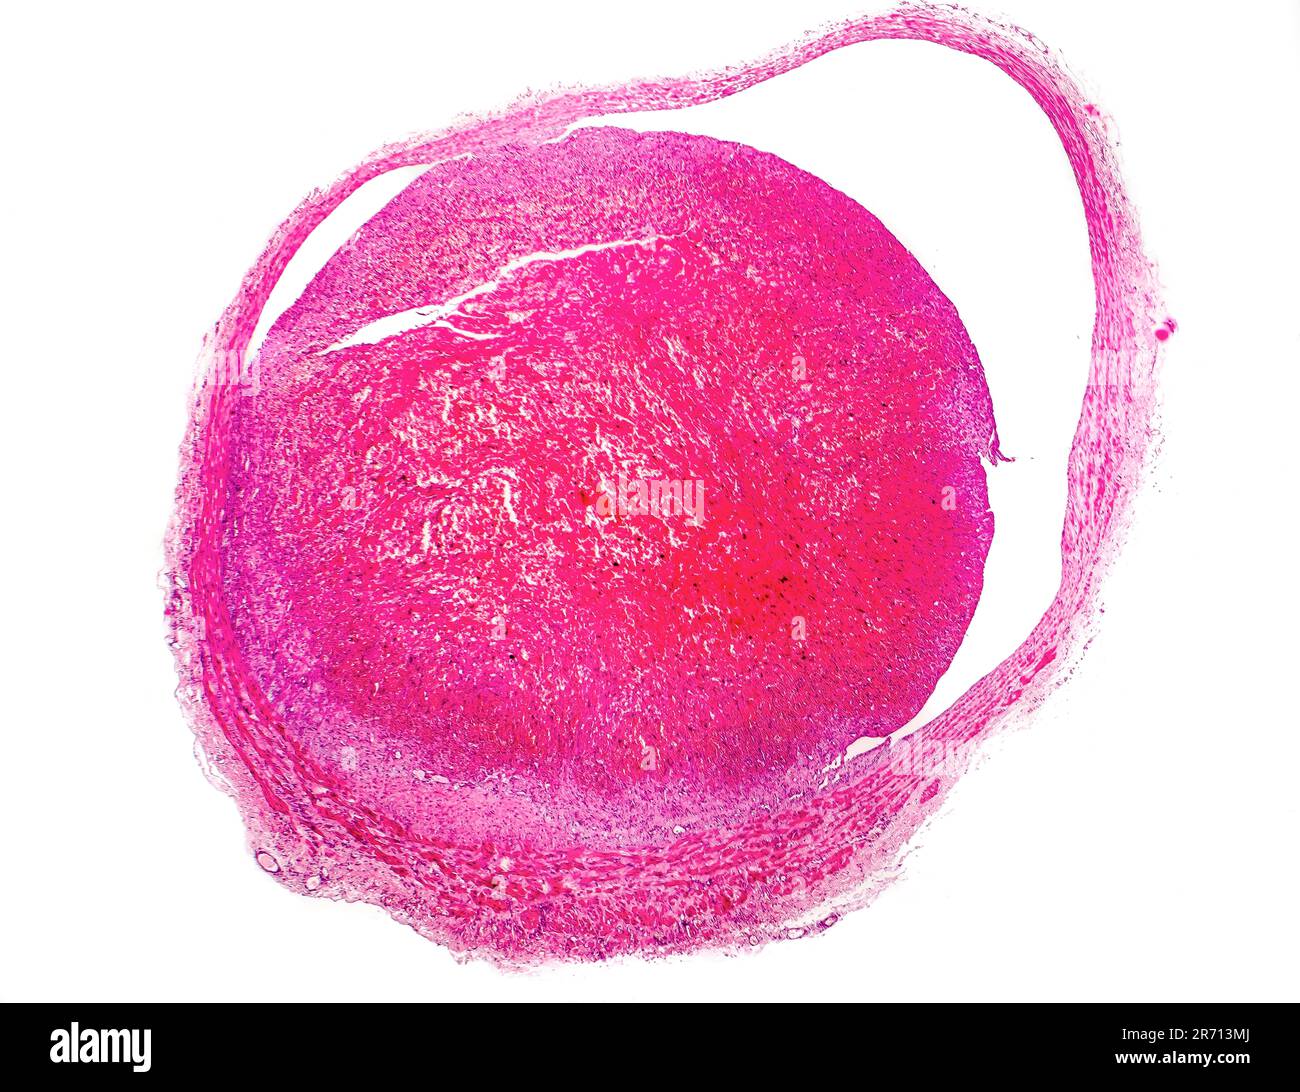 Thrombus inside blood vessel, light micrograph, hematoxylin and eosin staining Stock Photo